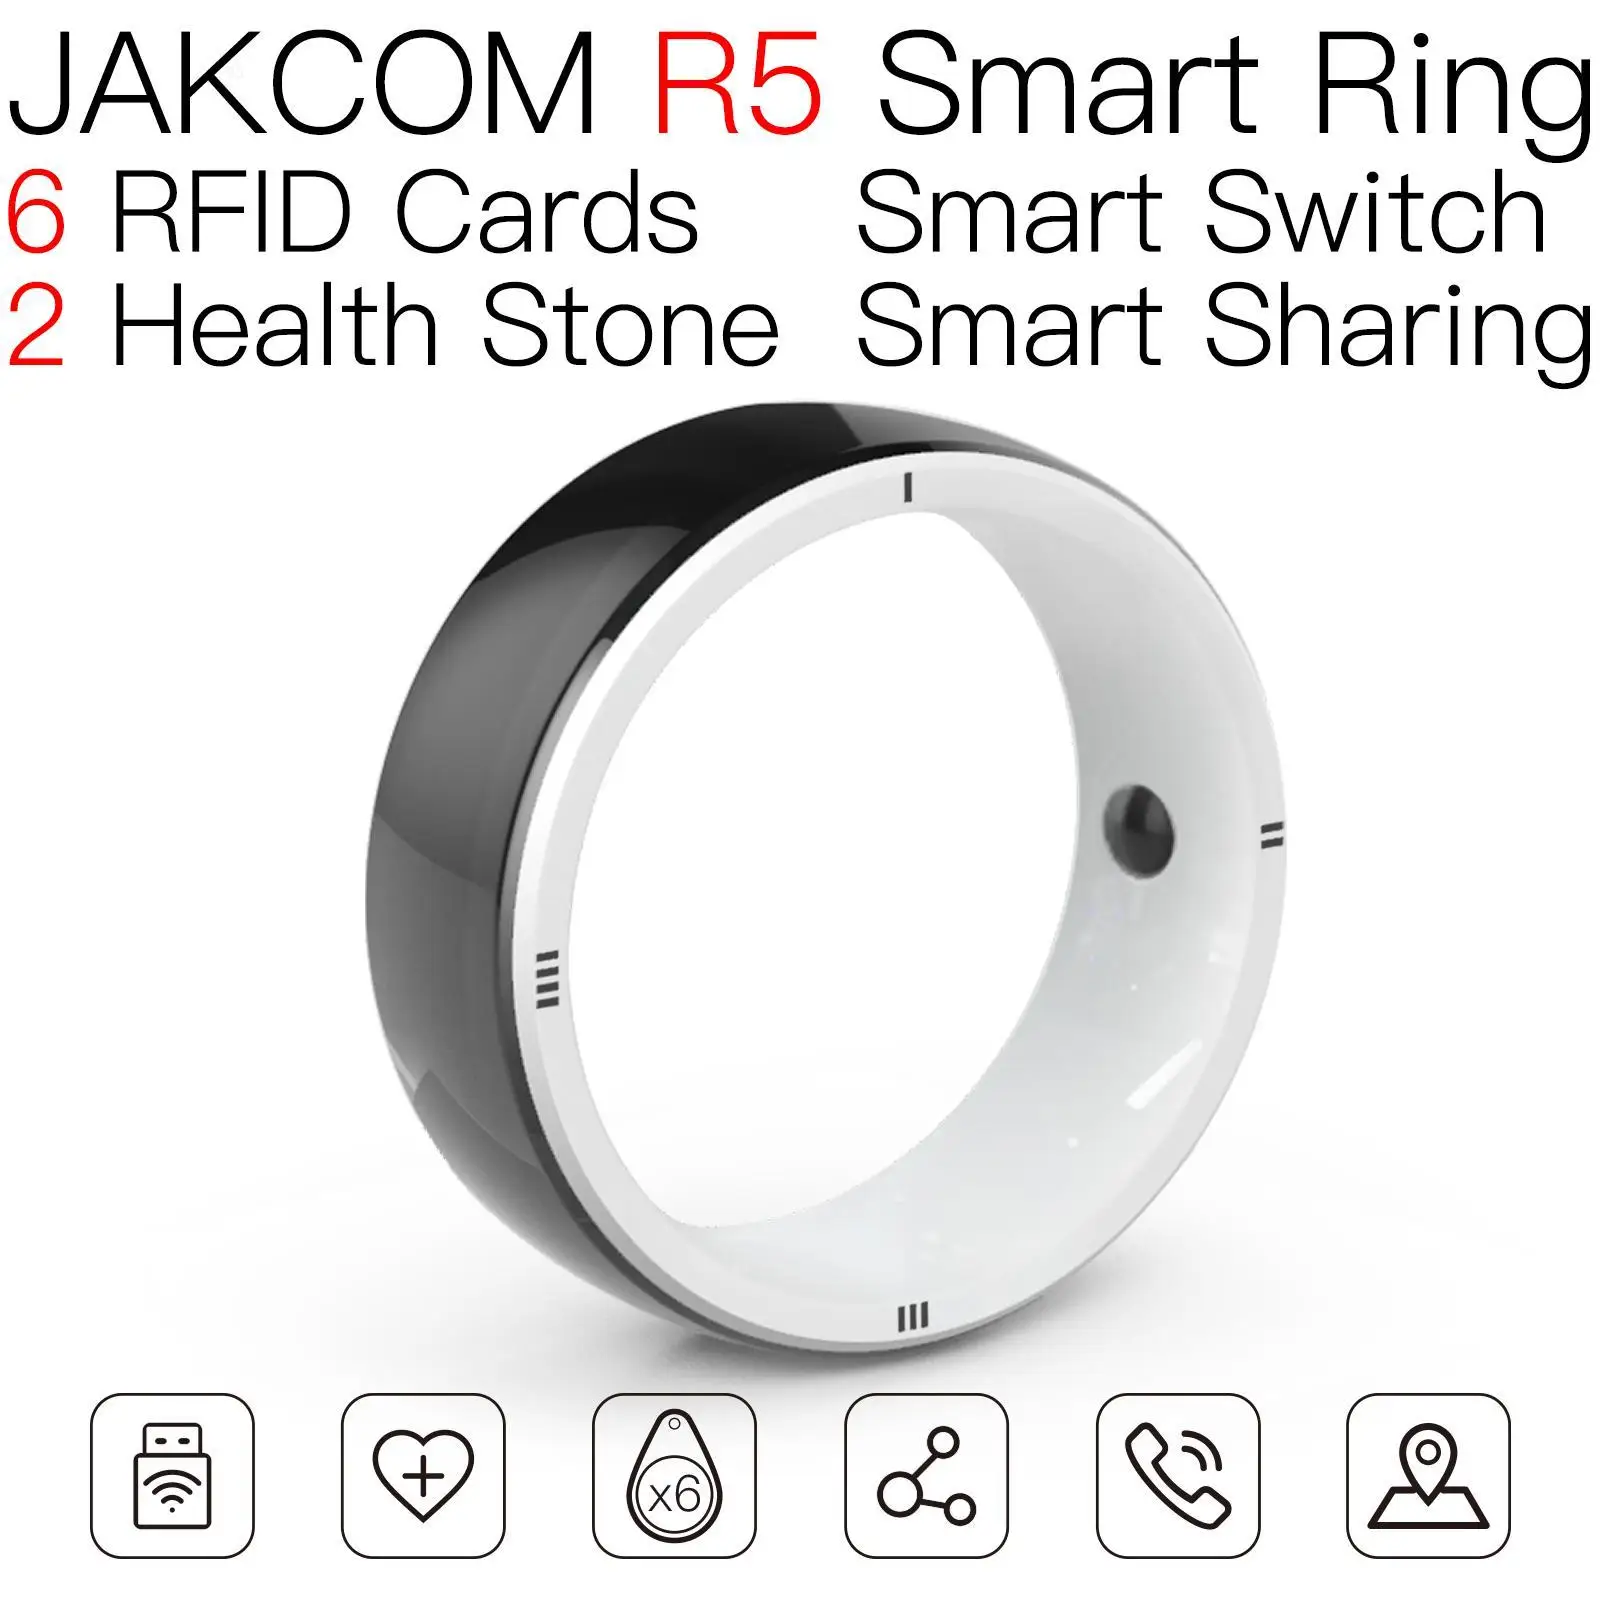 

JAKCOM R5 Smart Ring Nice than htv 7 brasil original mouse zigbee scene switch cheap items with free shipping 6 global